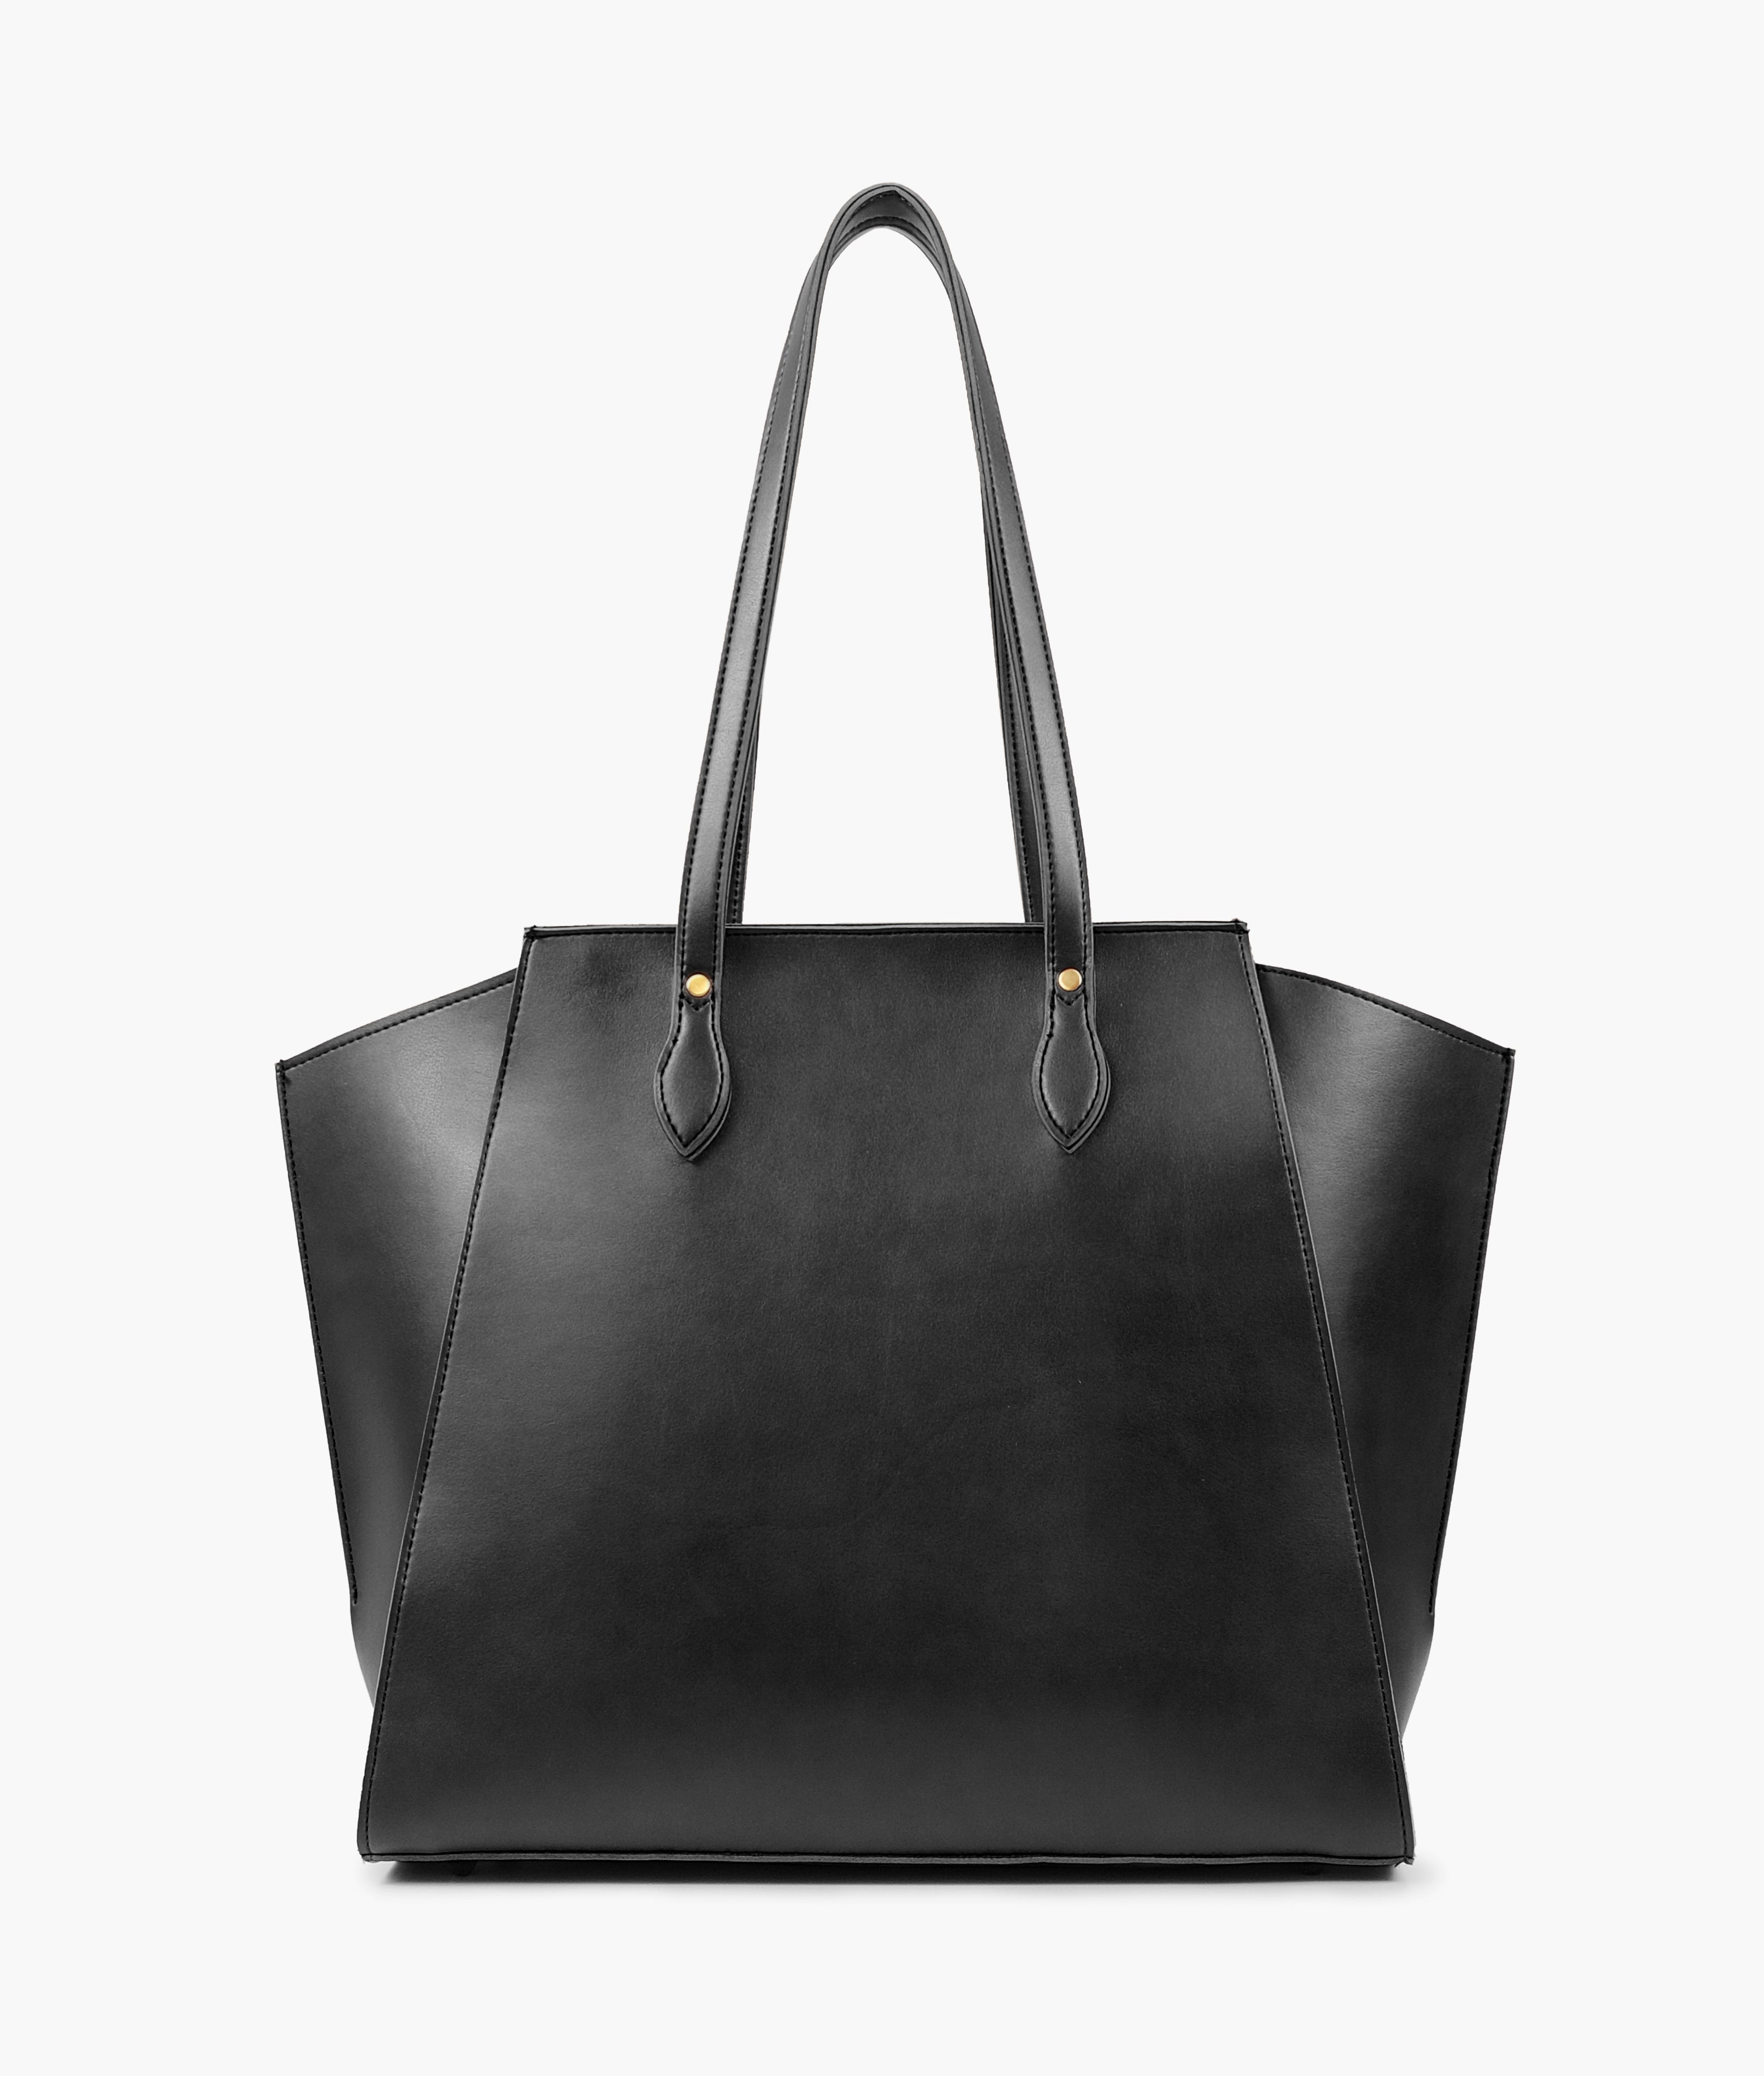 Black classic tote bag